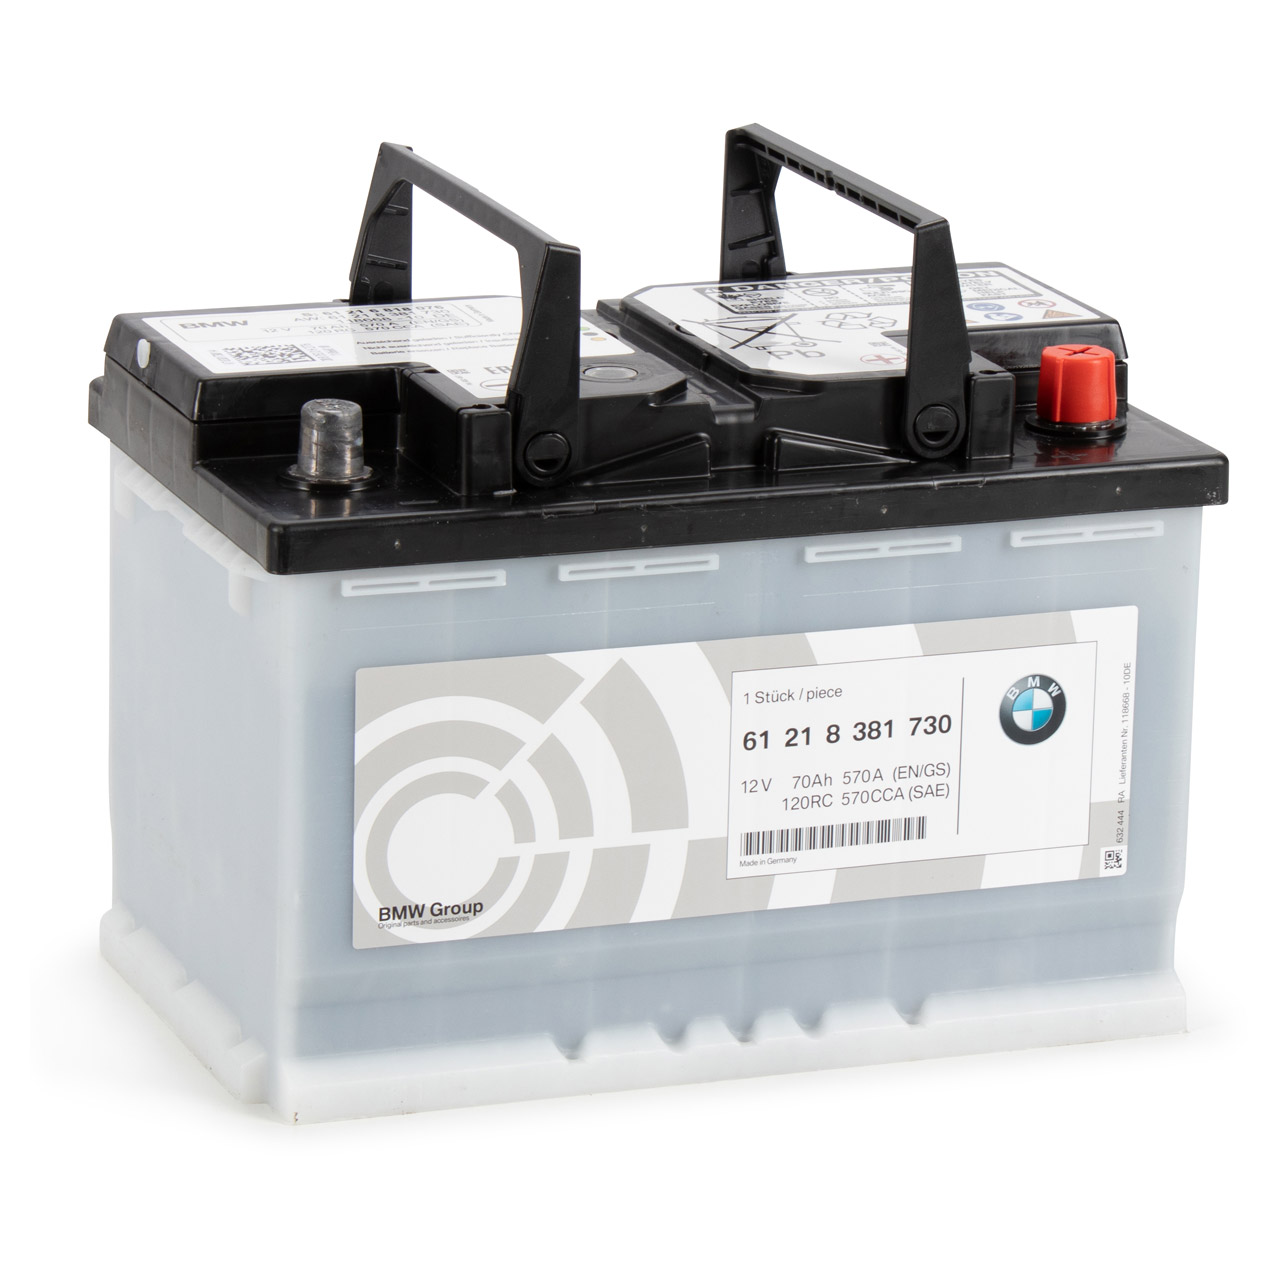 ORIGINAL BMW Autobatterie Batterie Starterbatterie 12V 70Ah 570A 61218381730